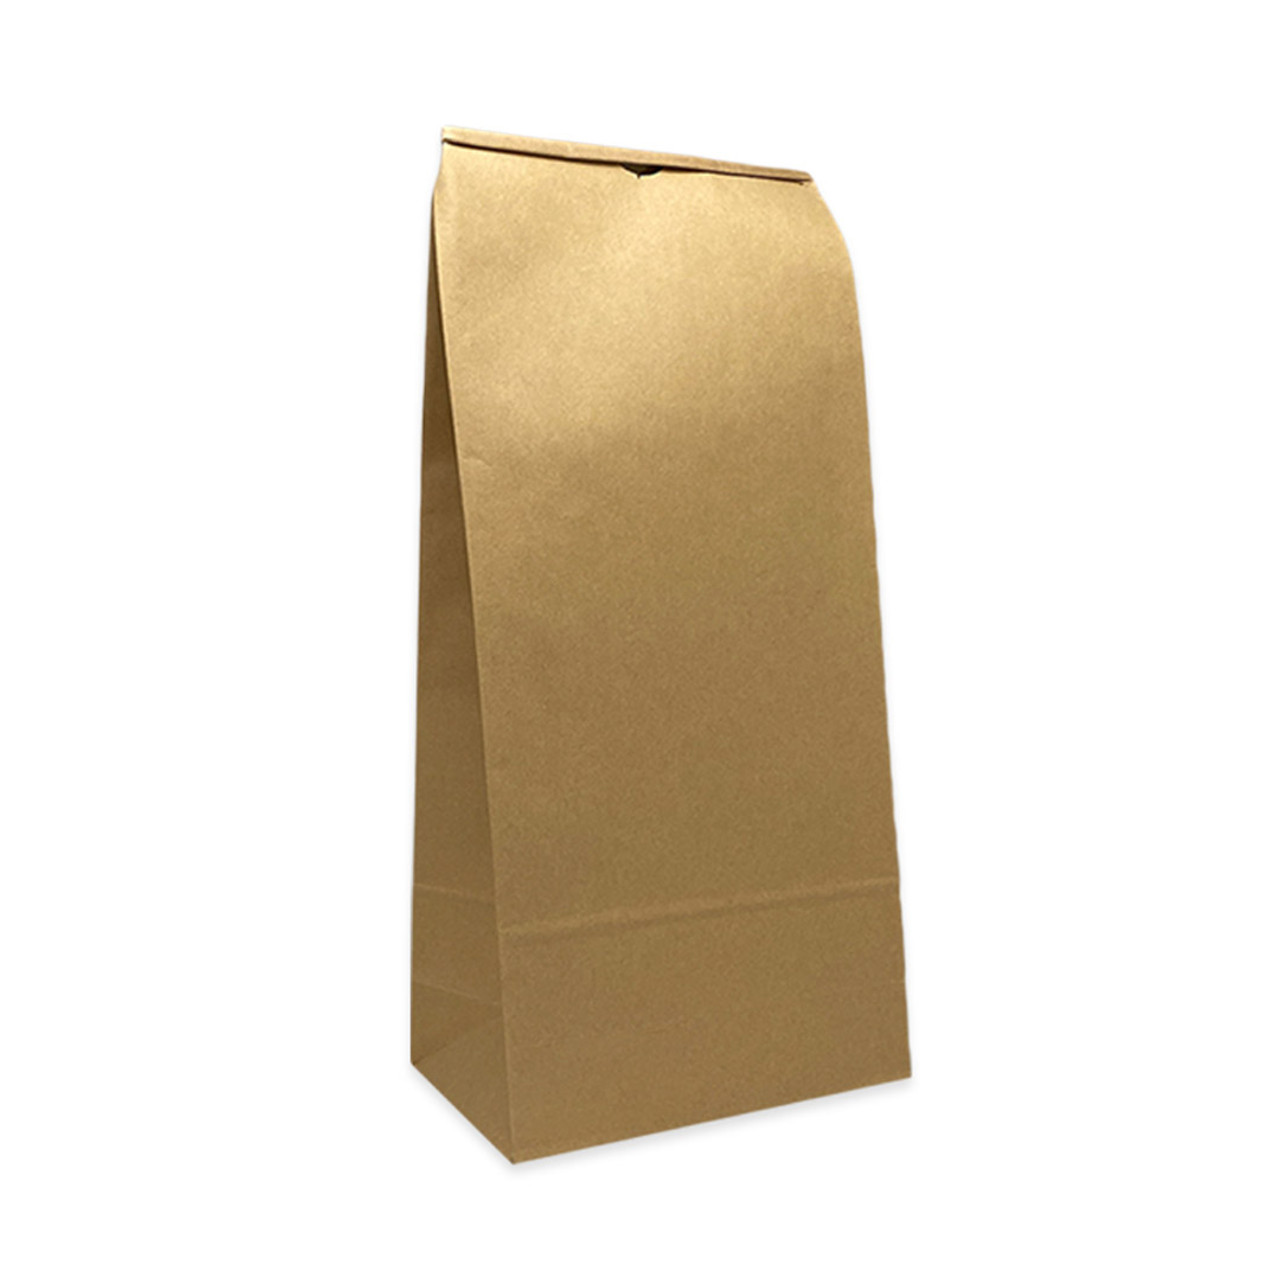 2 lb. 5" x 3" x 12-1/4" Kraft Coffee Bags per 100